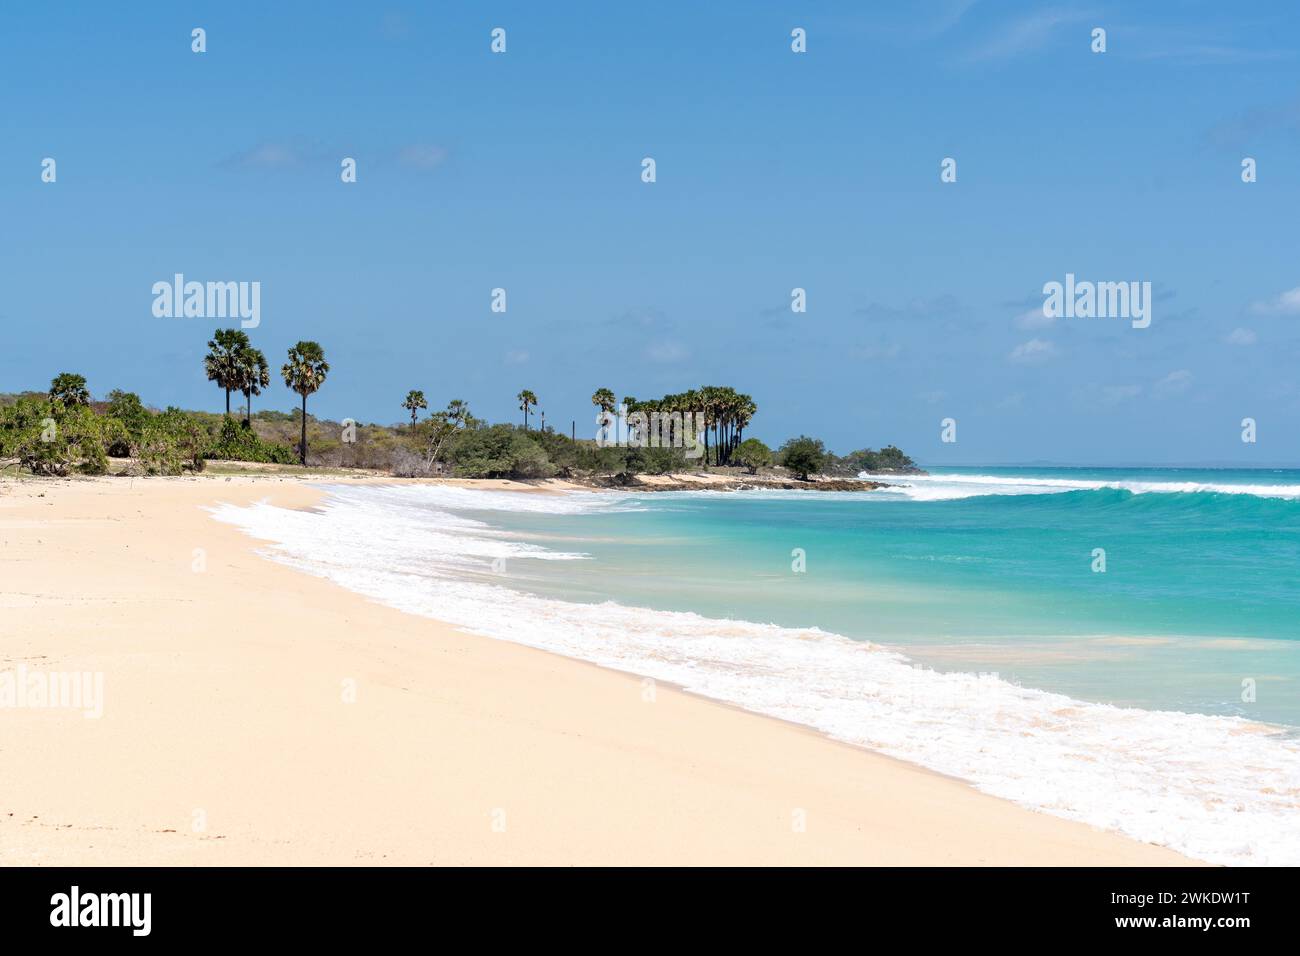 Beautiful View of Liman Beach Semau Island, East Nusa Tenggara, Indonesia Stock Photo